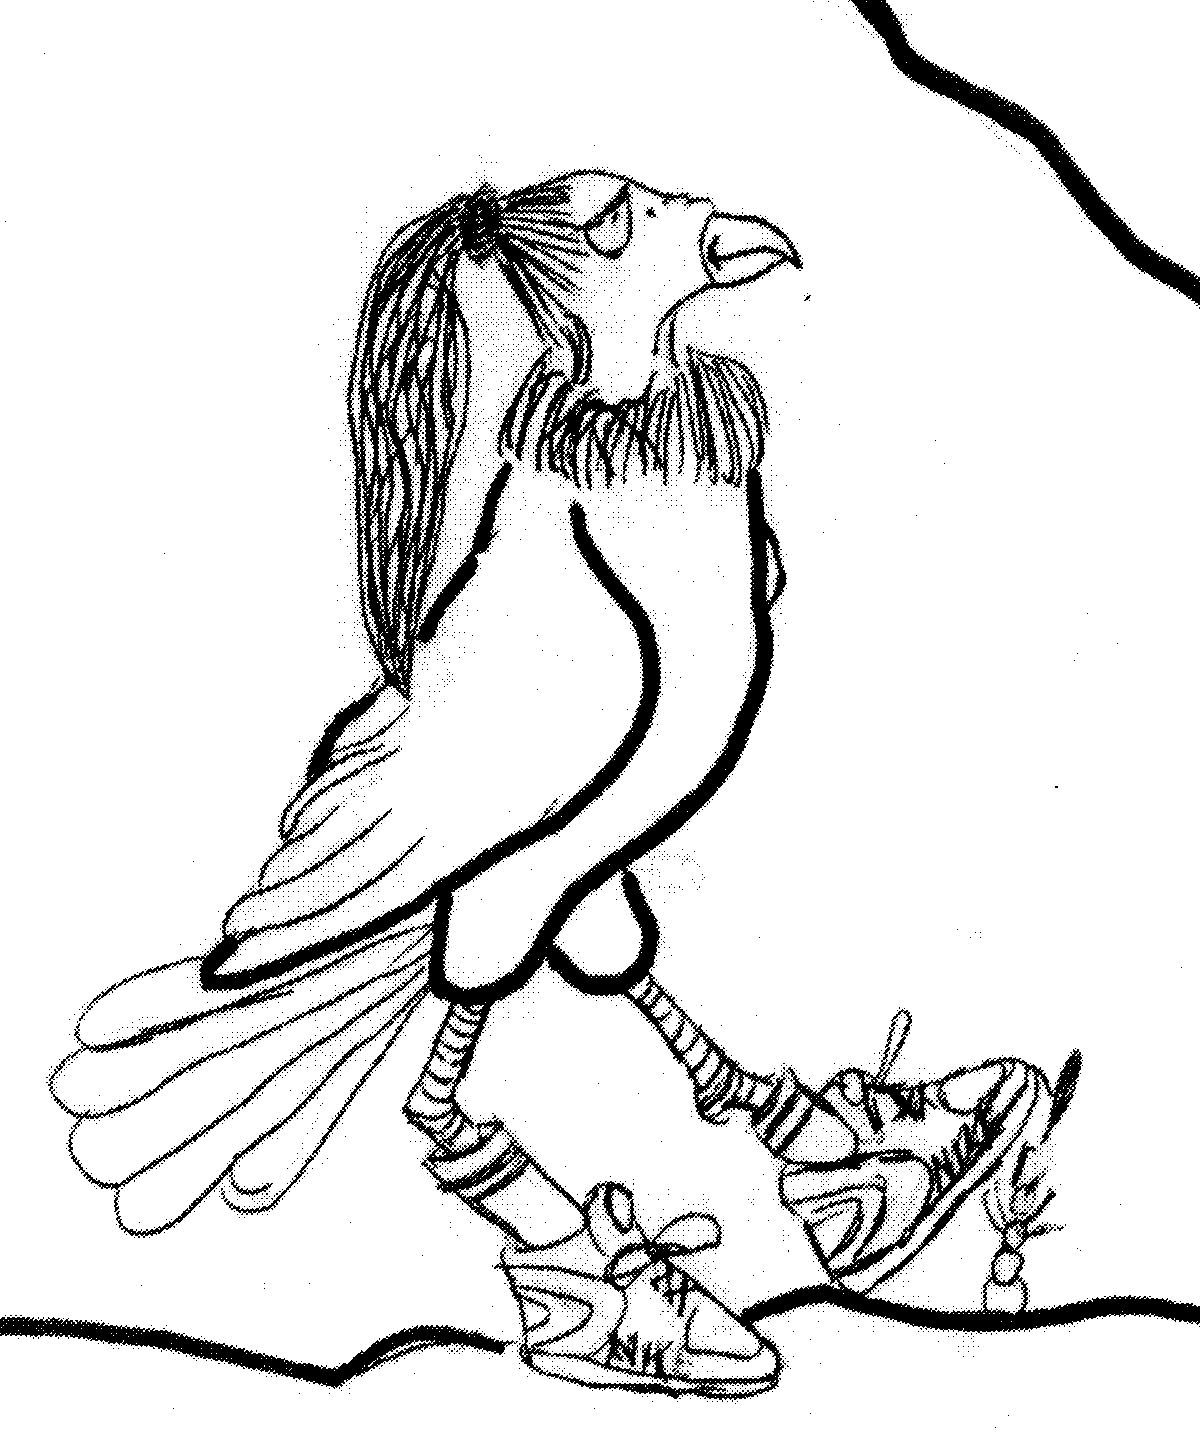 Illustration of Buzzard